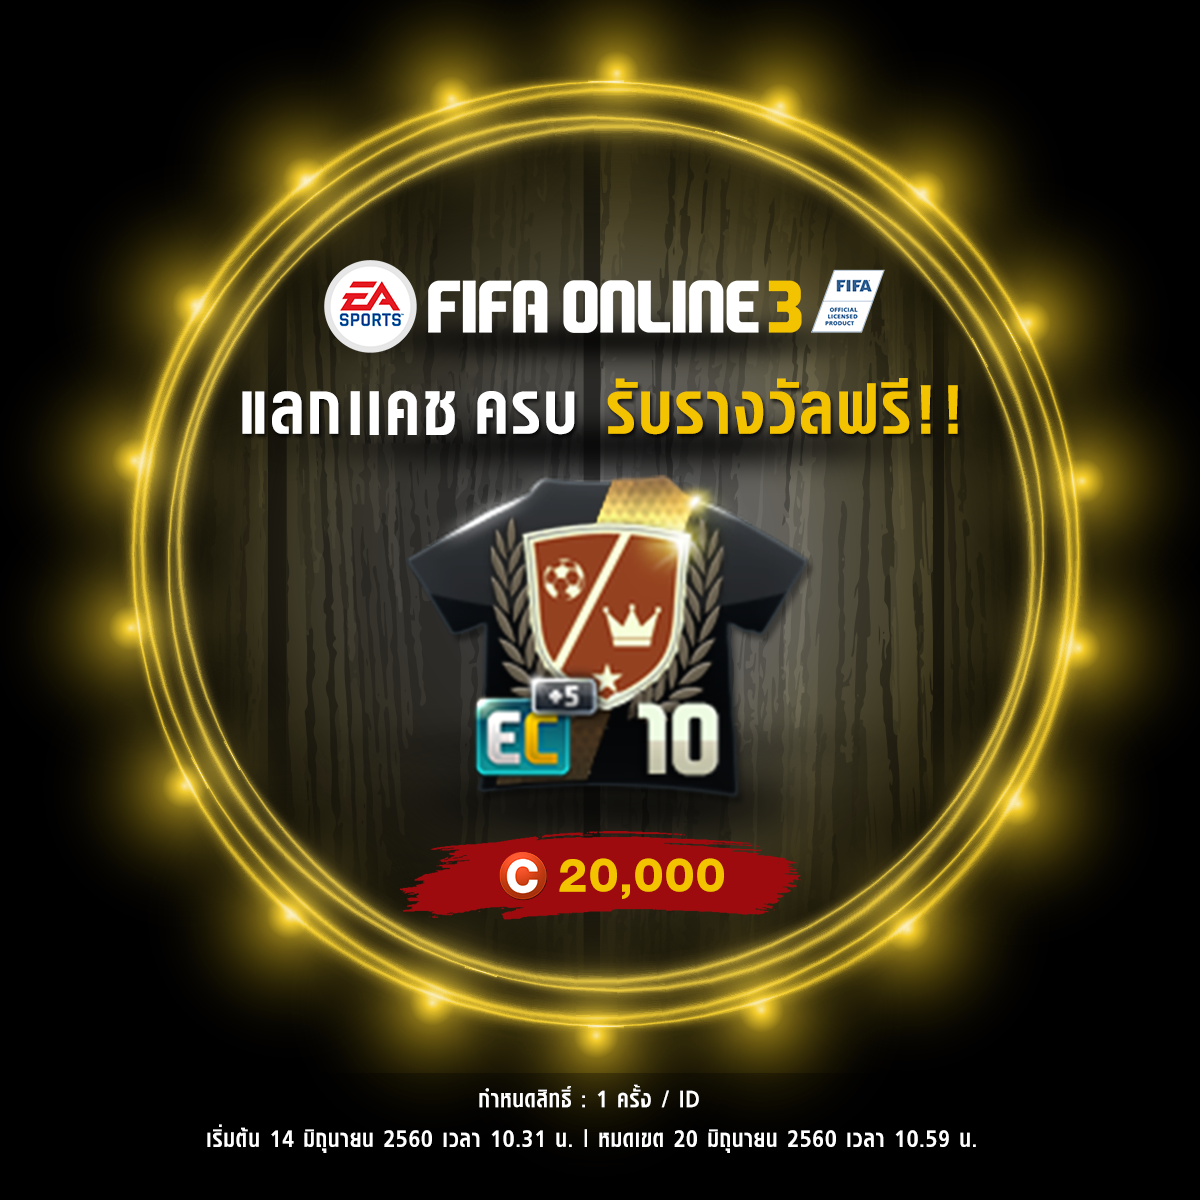 Fo3-nap-20000-cash-game-thu-thai-lan-se-nhan-duoc-bonus-the-ec-best-10-va-wl-1